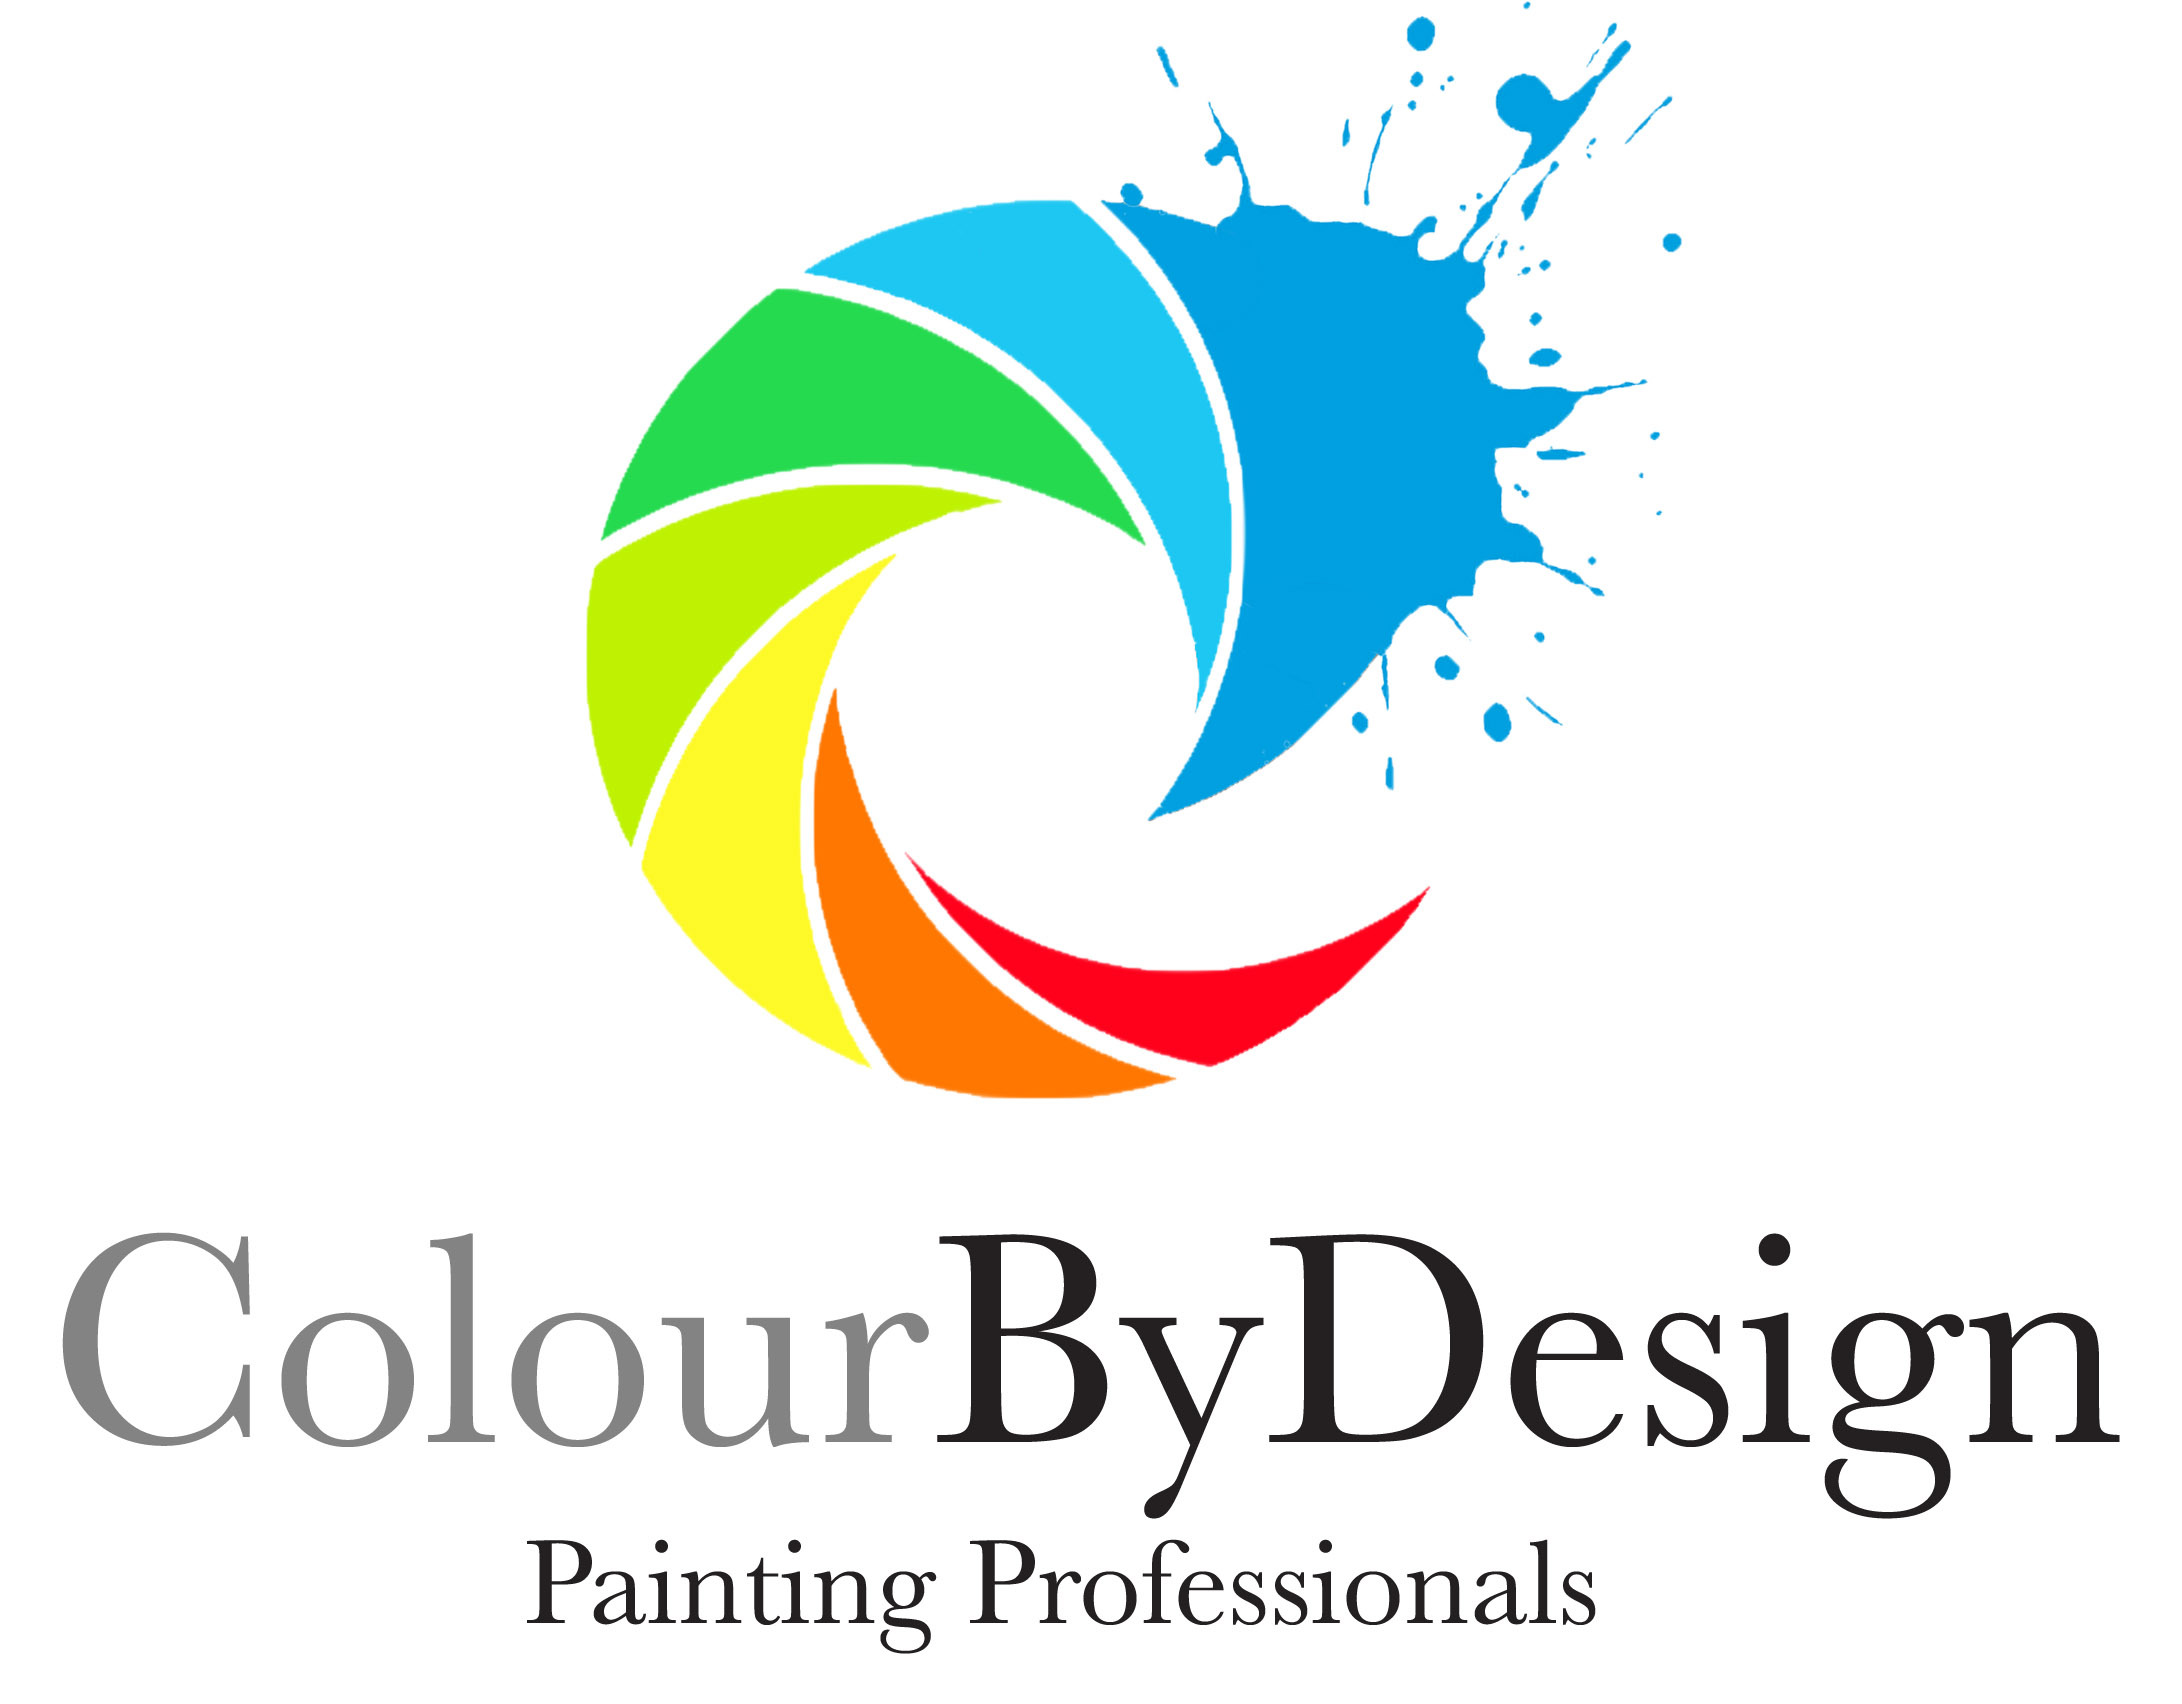 Colour By Design's logo